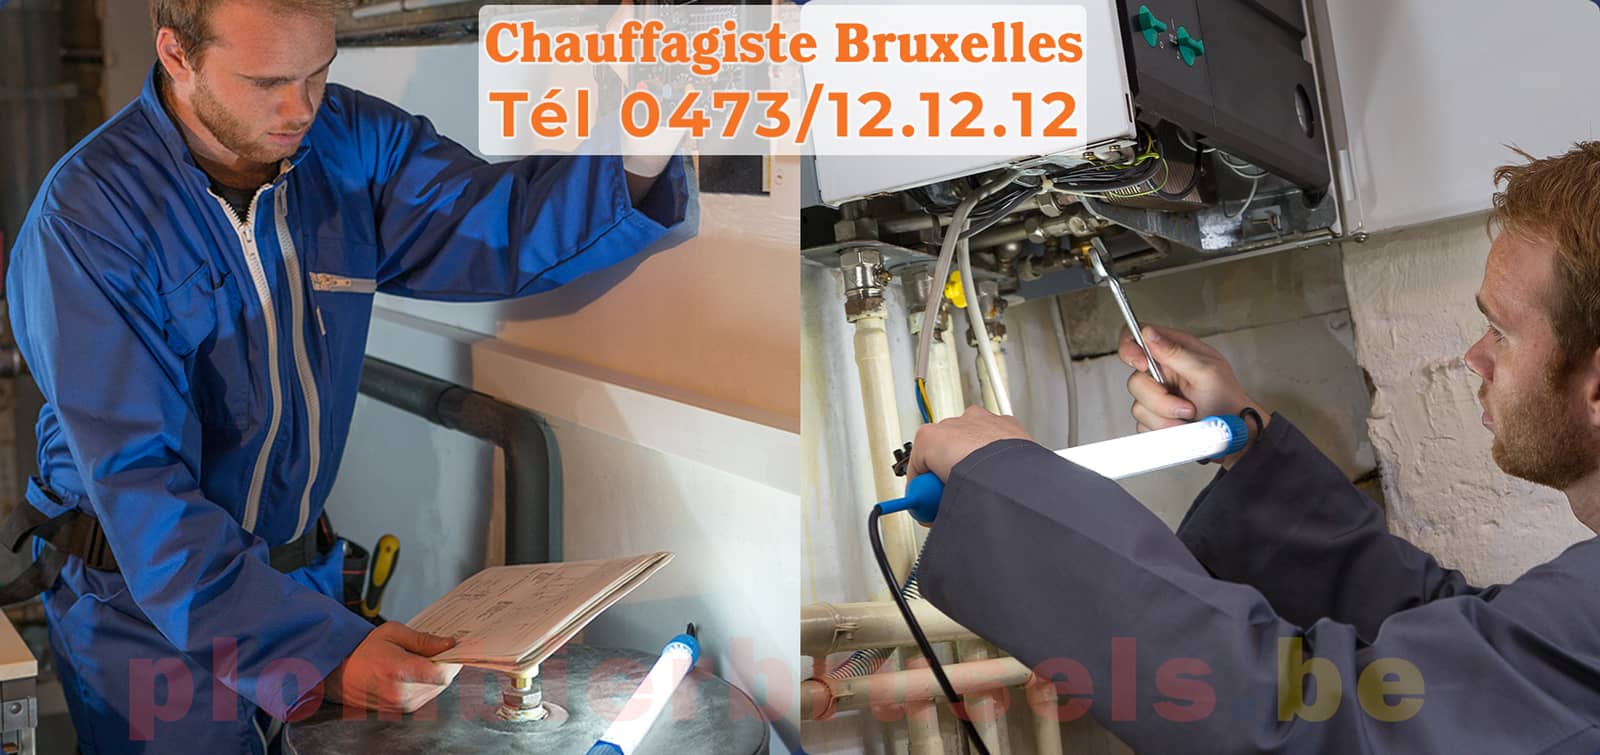 Chauffagiste Bruxelles service de Chauffage tél 0473/12.12.12